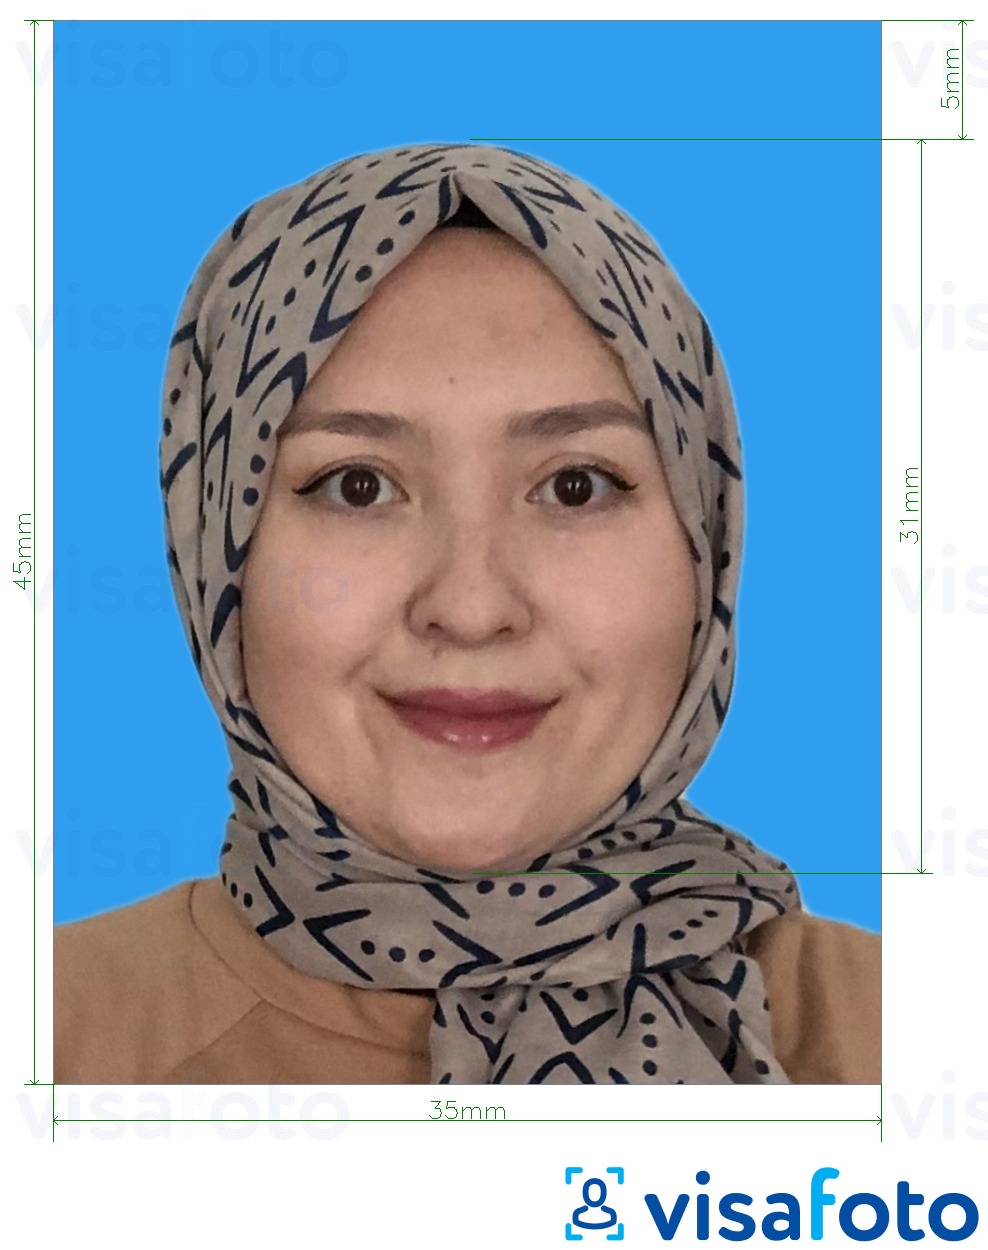 Shembulli i fotos per Malajzia Visa 35x45 mm sfond blu me specifikimet ekzakte